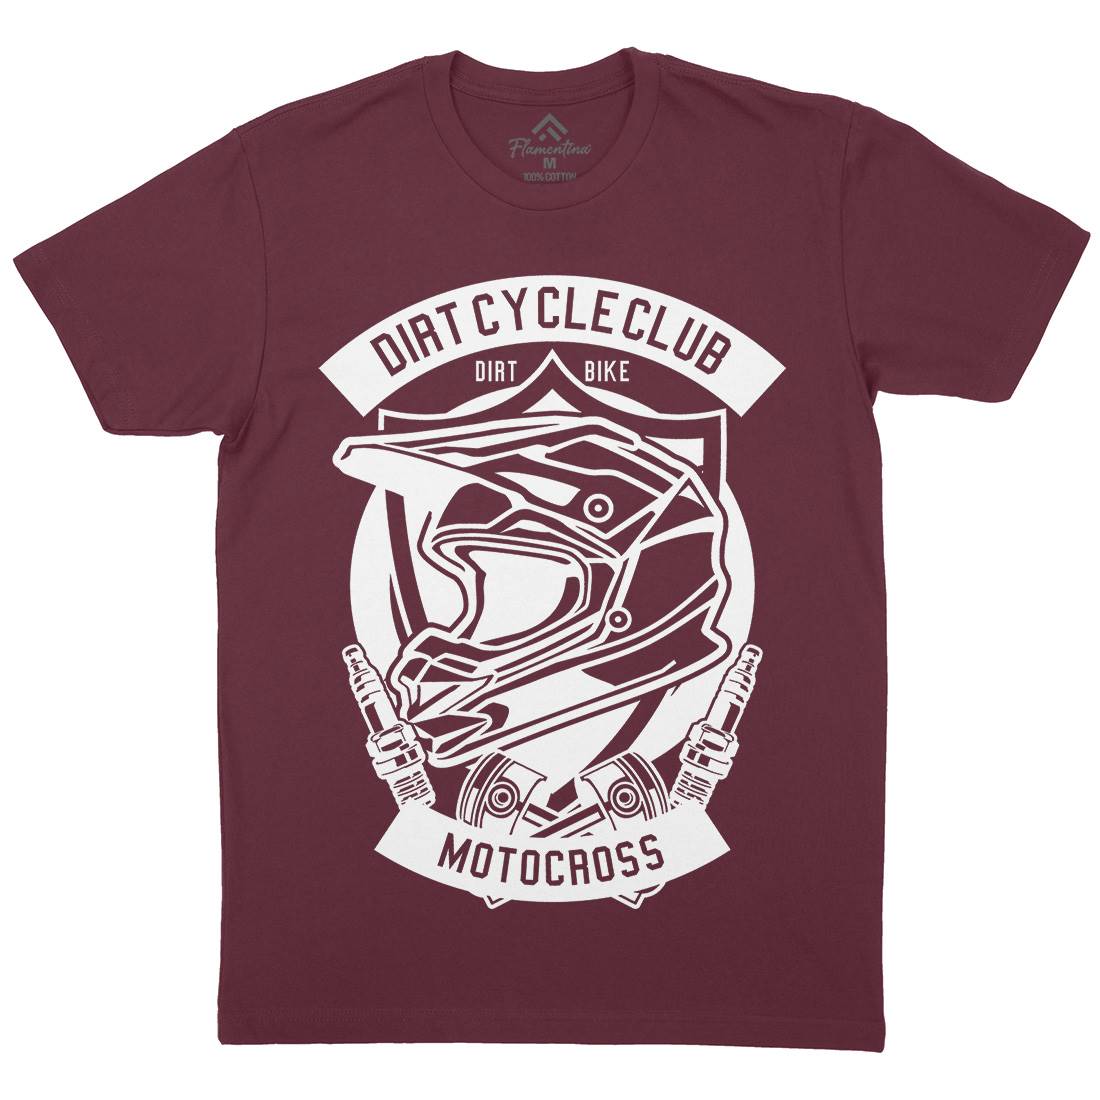 Dirty Cycle Club Mens Crew Neck T-Shirt Motorcycles B532